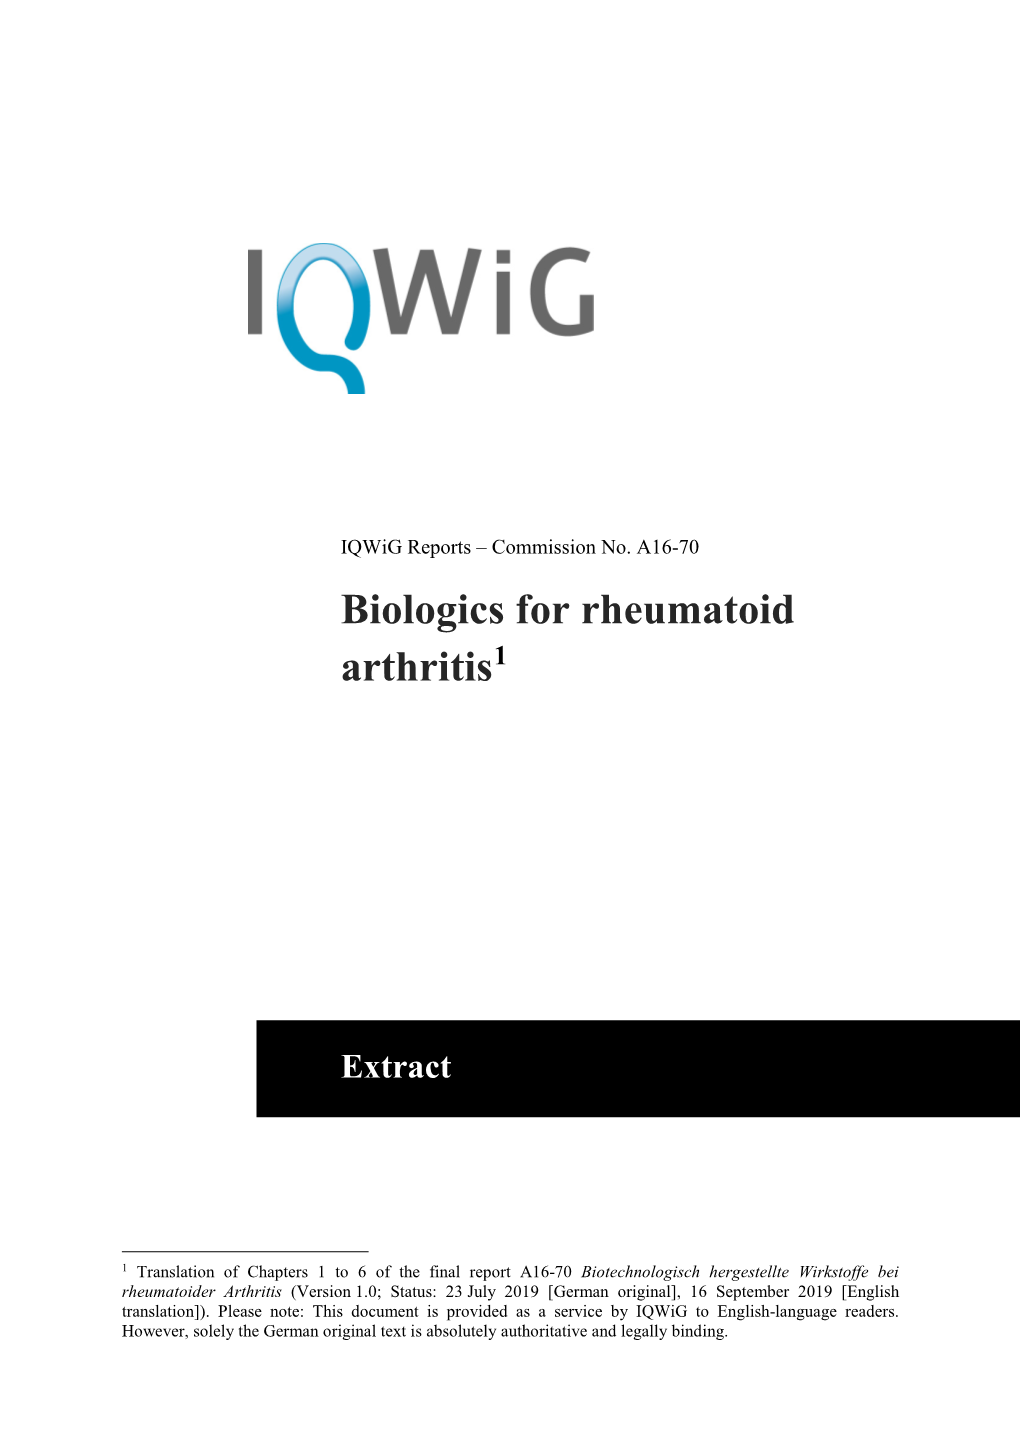 Biologics for Rheumatoid Arthritis1